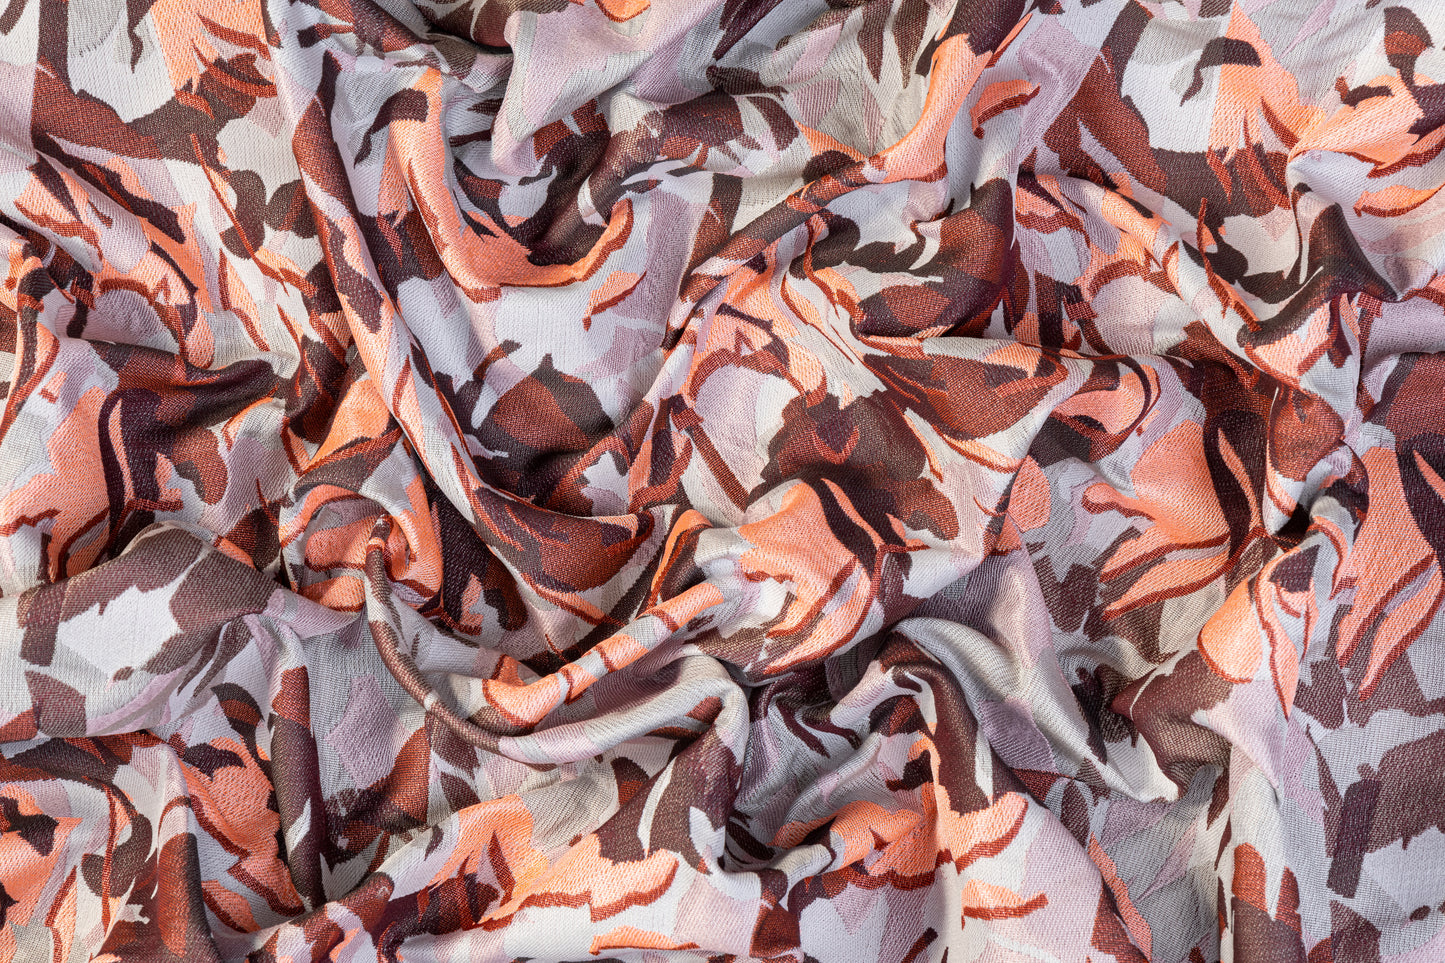 Abstract Italian Brocade - Coral Pink, Gray